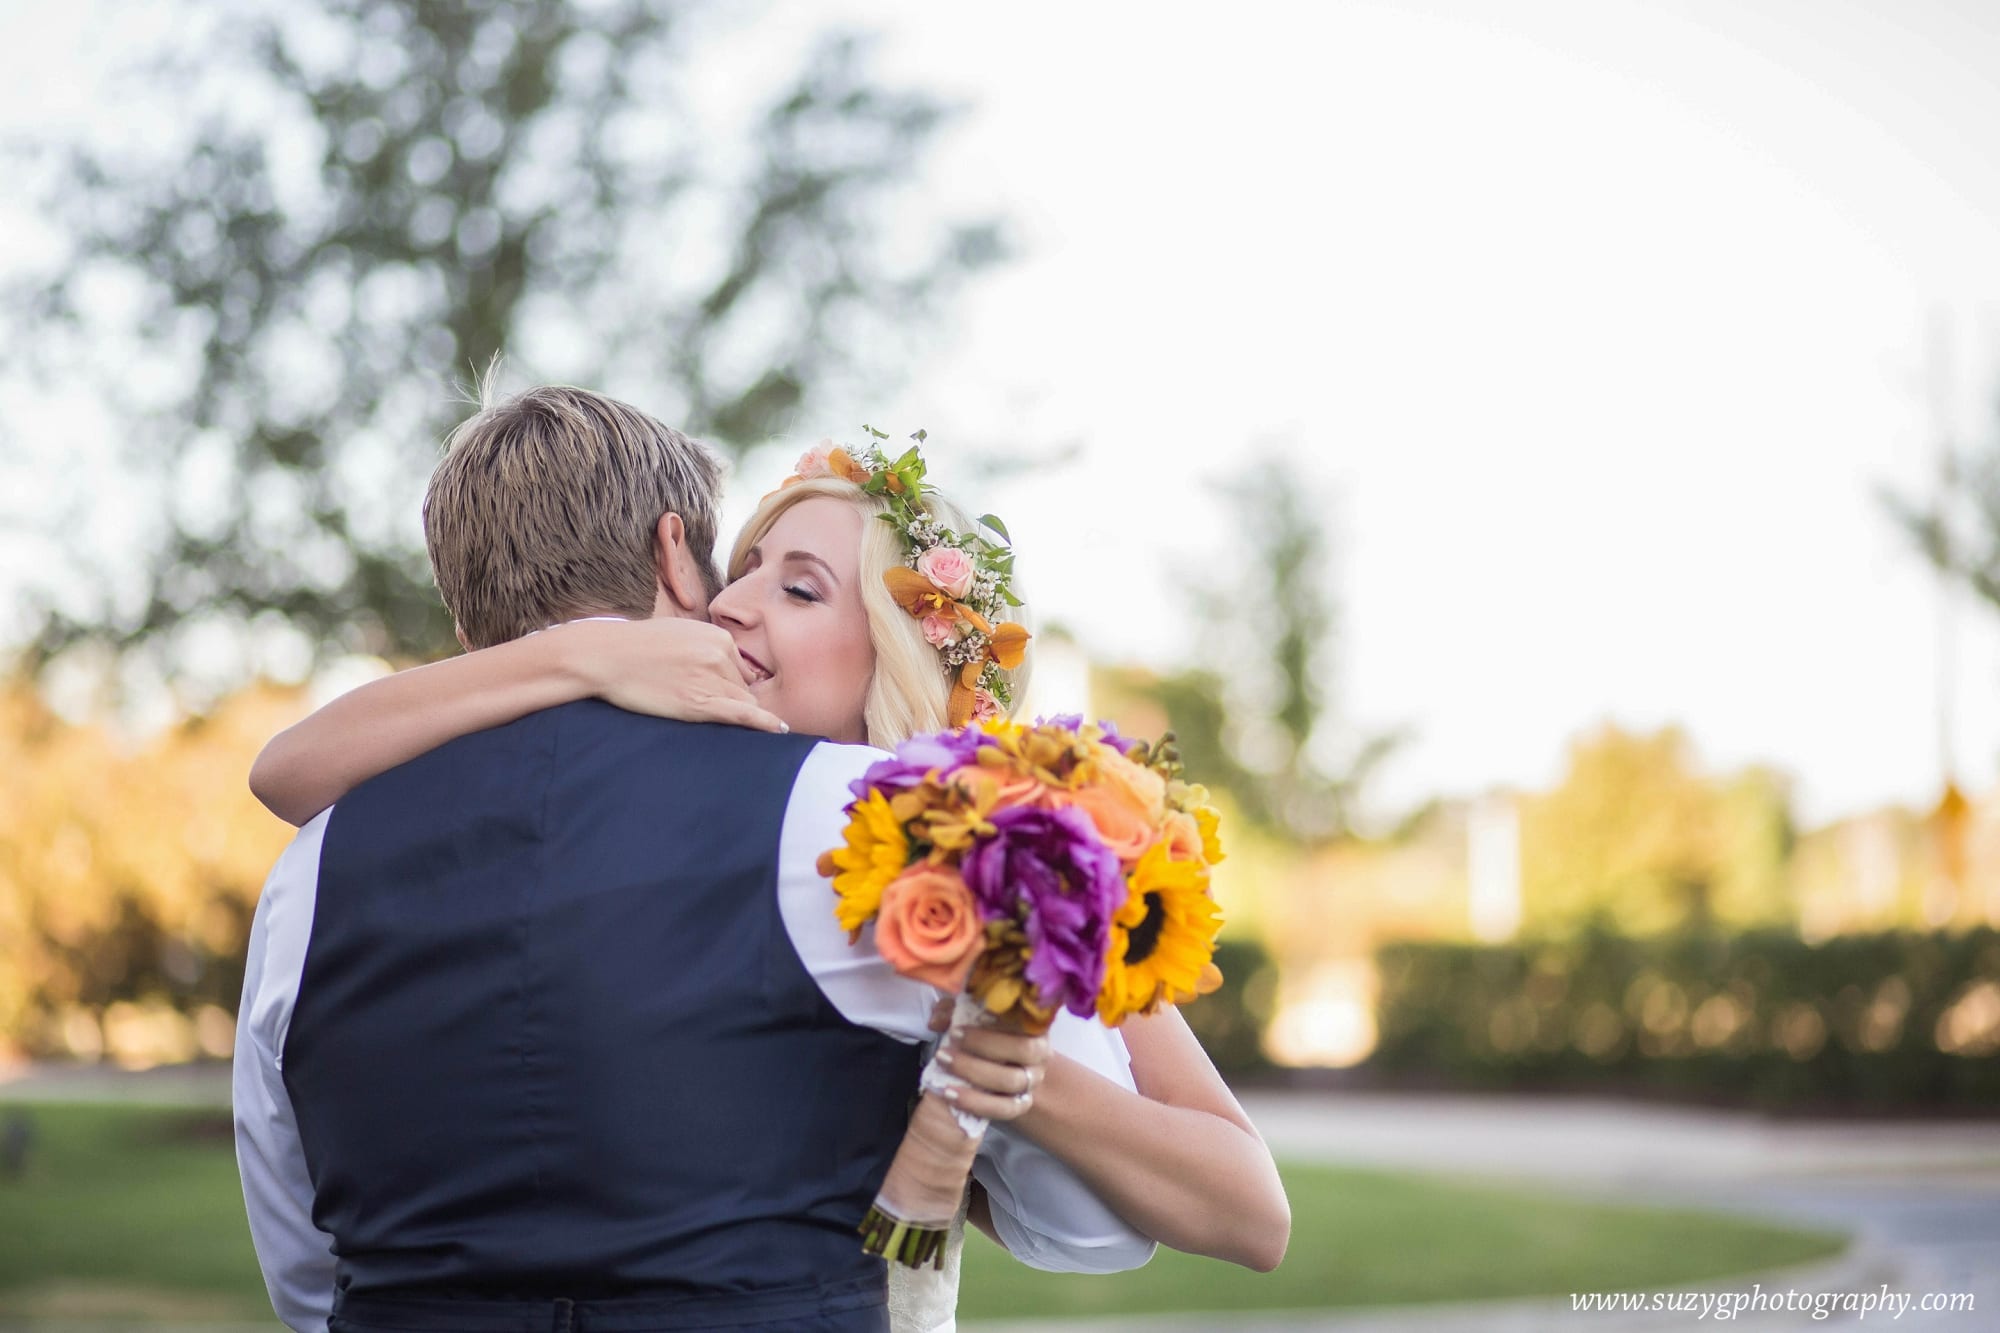 steel burden orangerie-bohemian wedding-baton rouge-lake charles-suzy g-photography-suzygphotography_0027